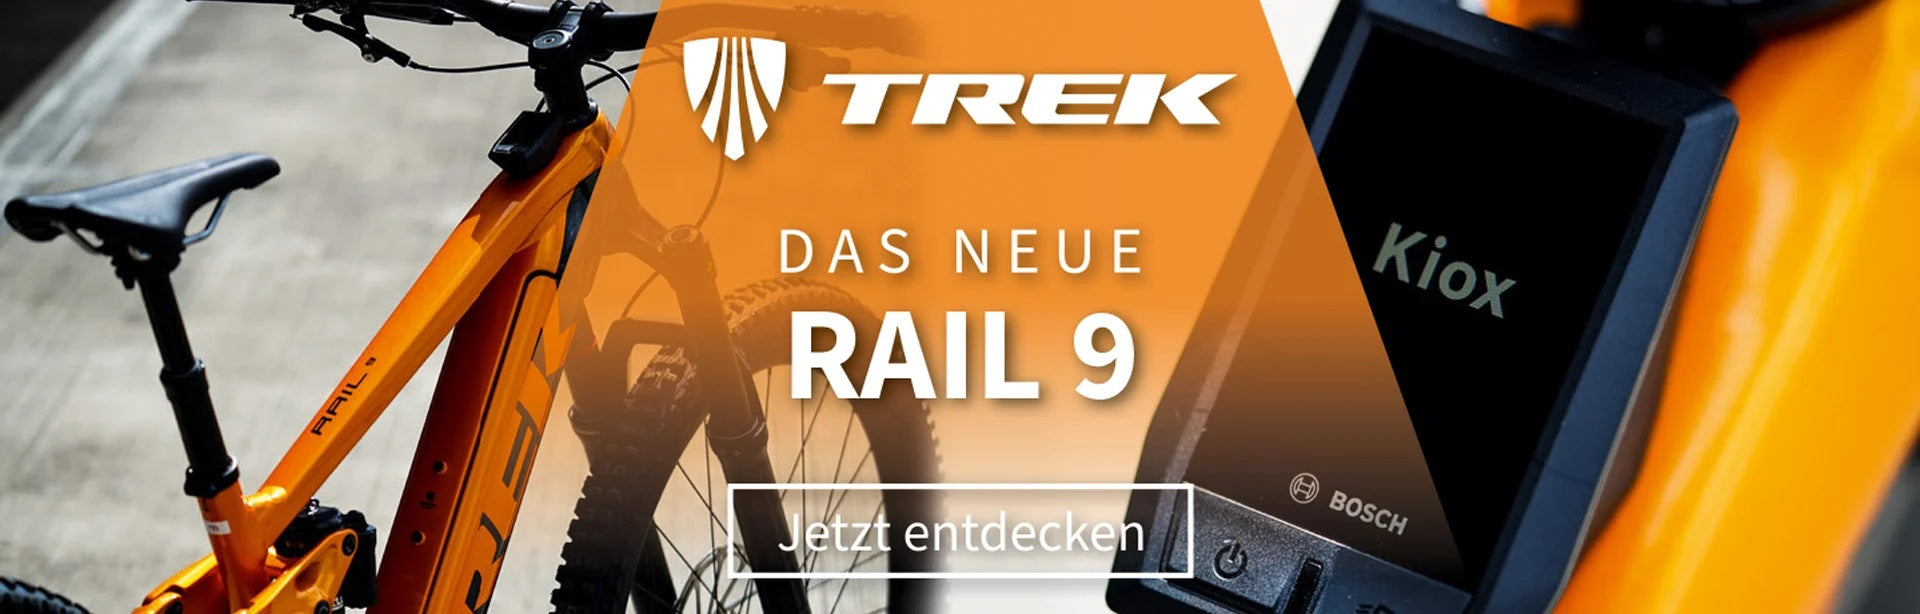 TREK Rail E-Bikes günstig kaufen | TREK e-Bike Shop